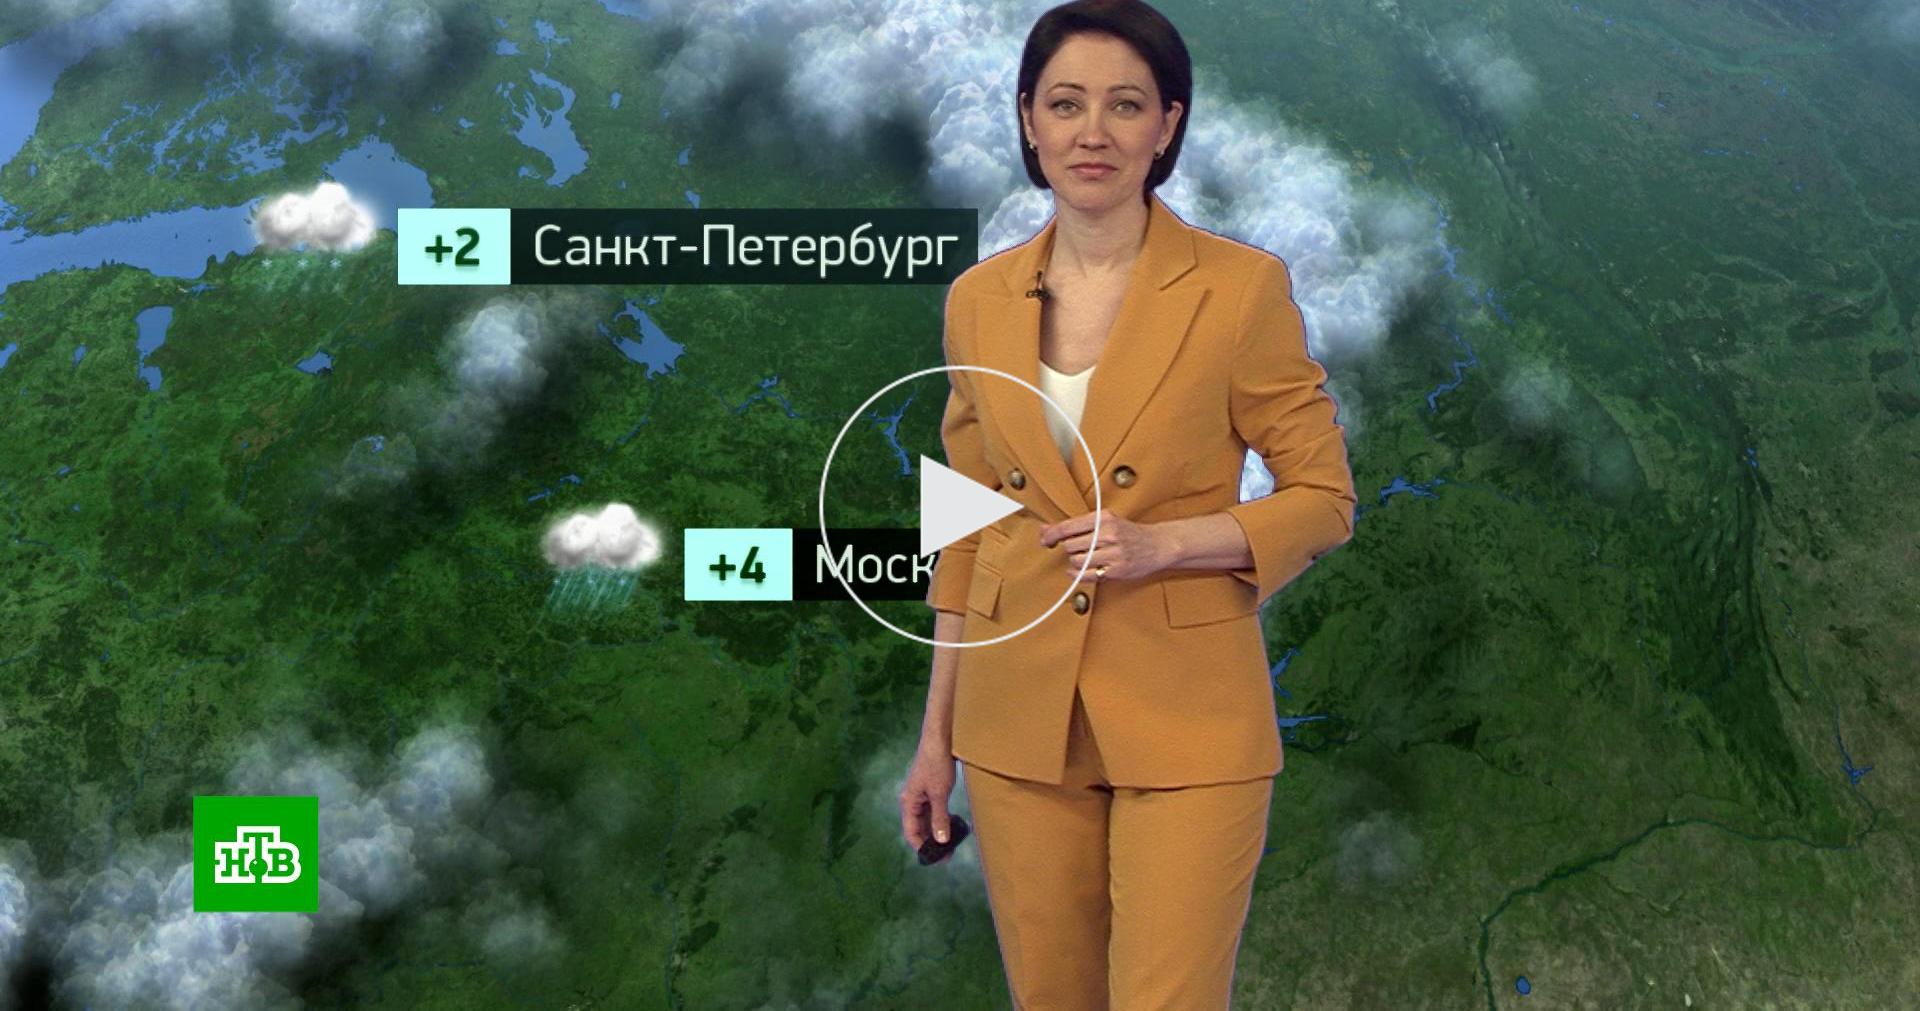 Татьяна антонова ведущая прогноз погоды фото